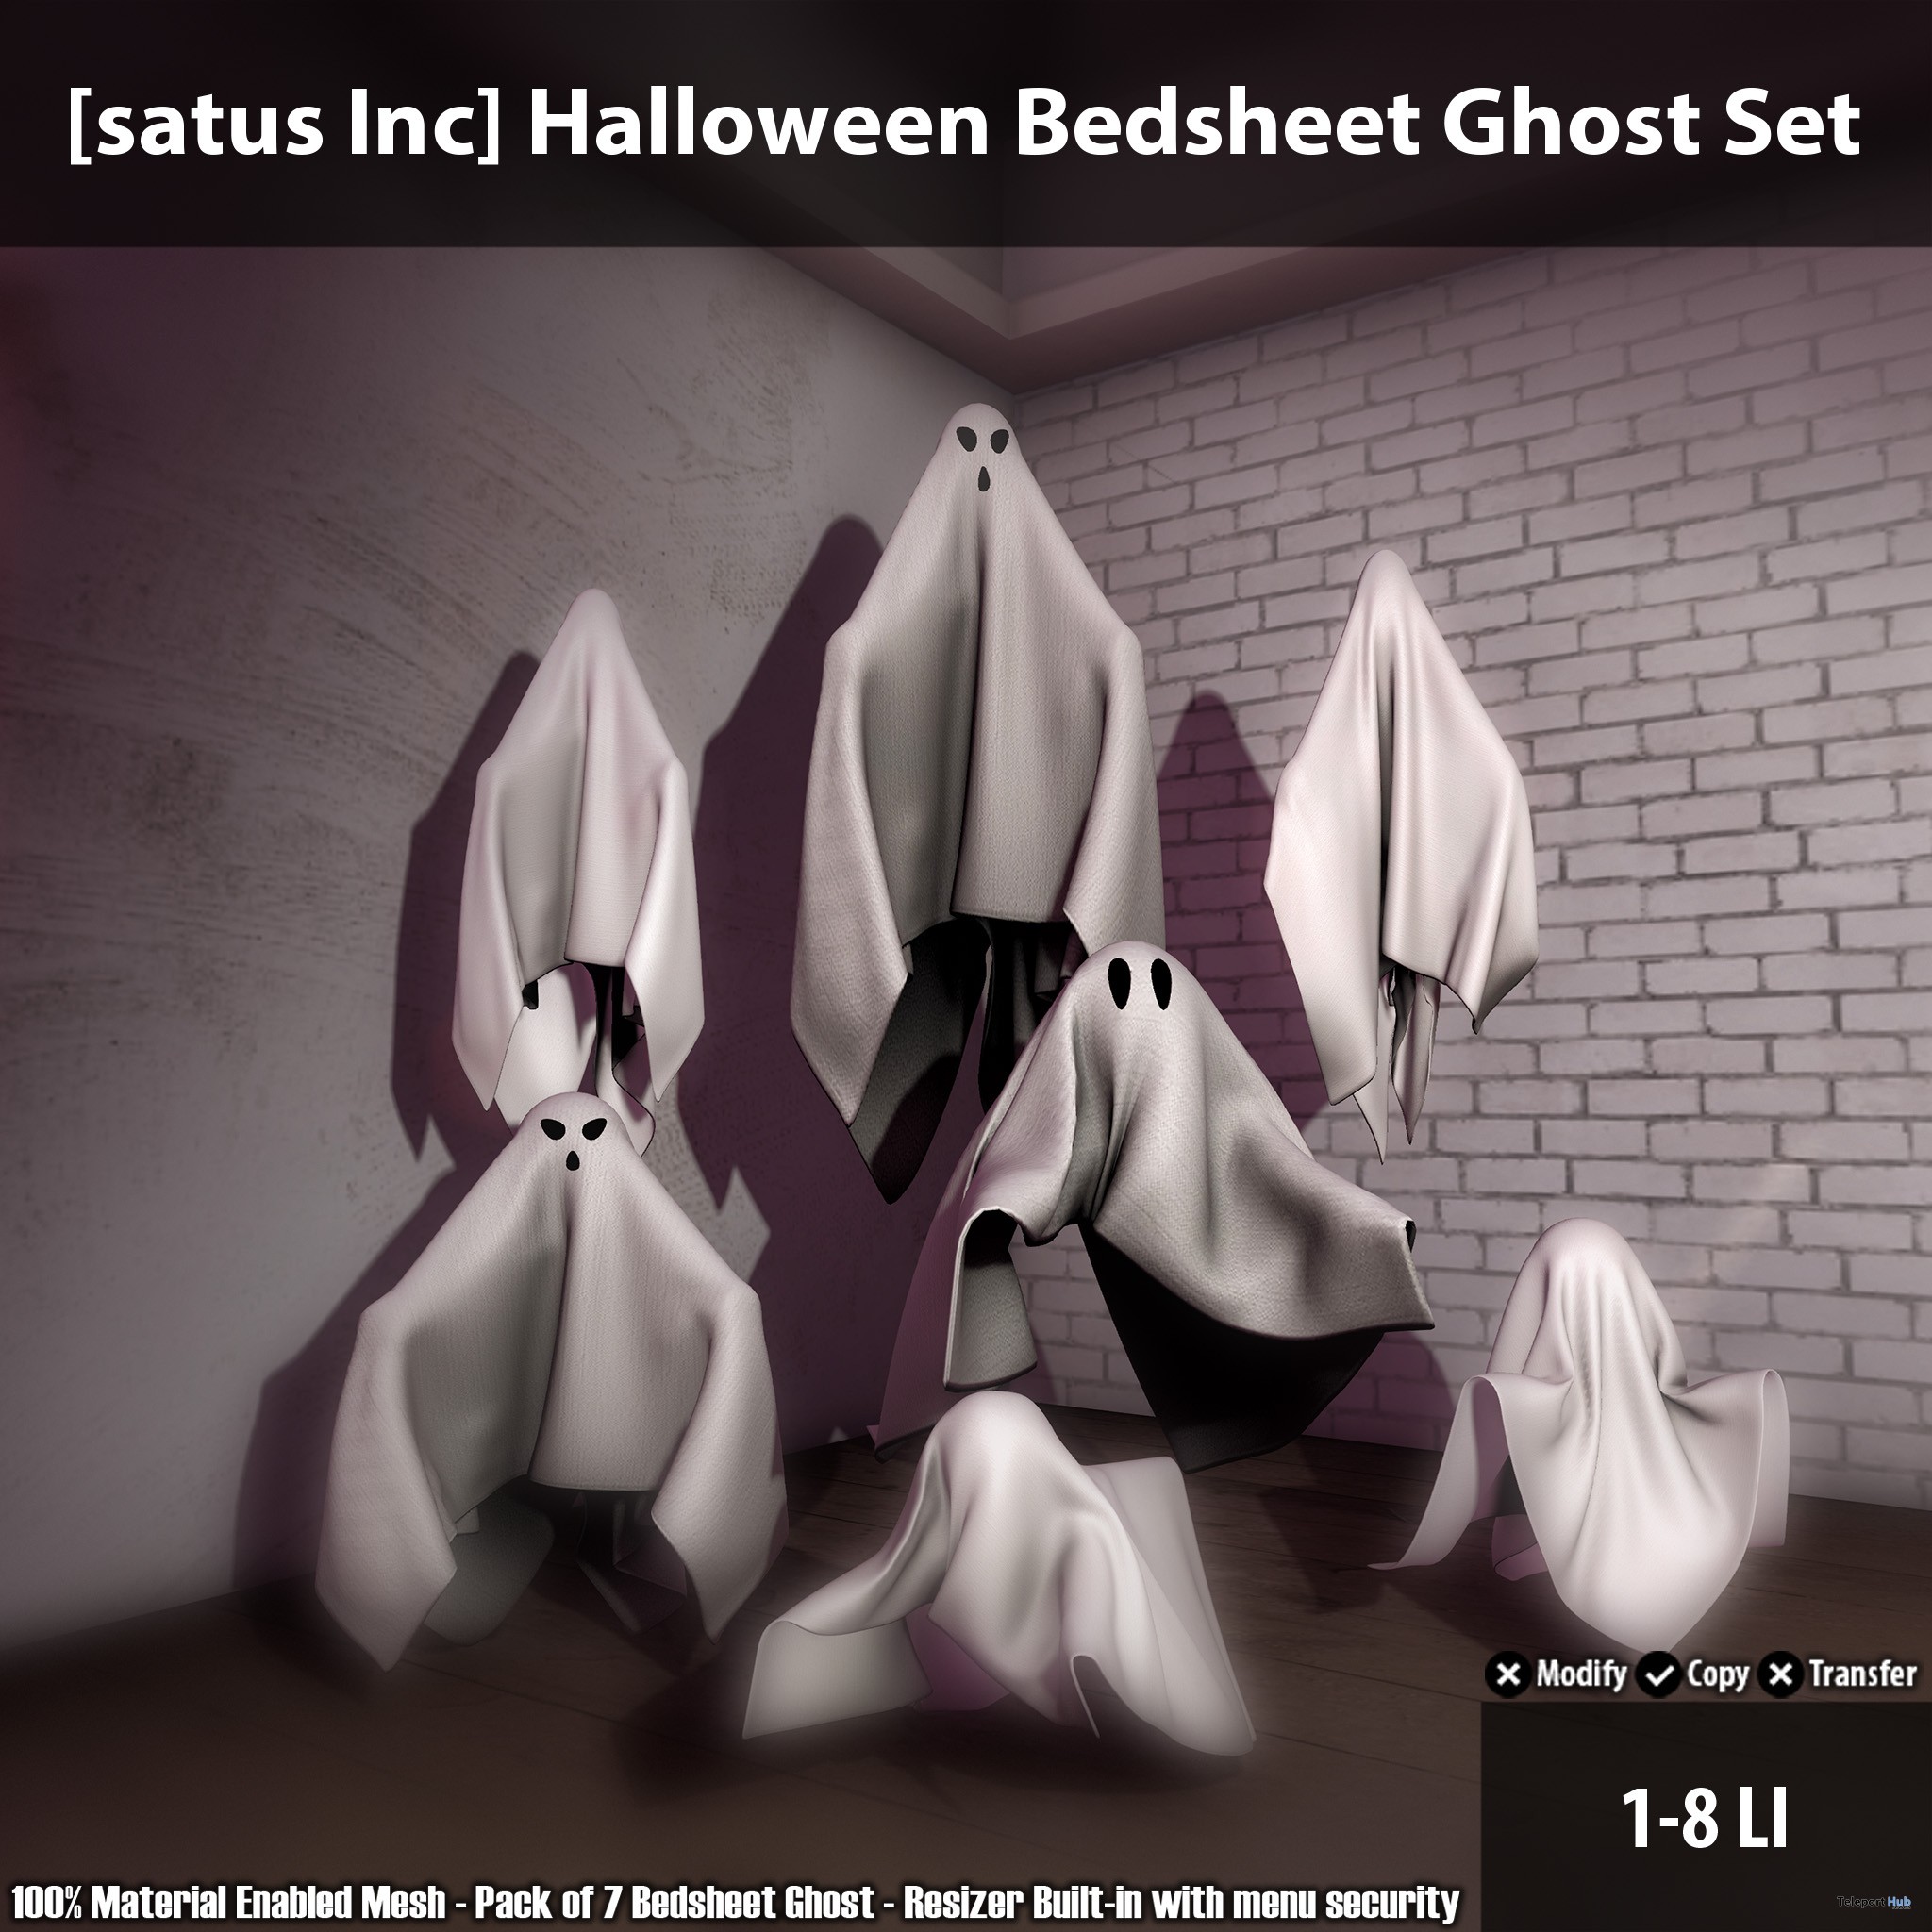 New Release: Halloween Bedsheet Ghost Set by [satus Inc] - Teleport Hub - teleporthub.com